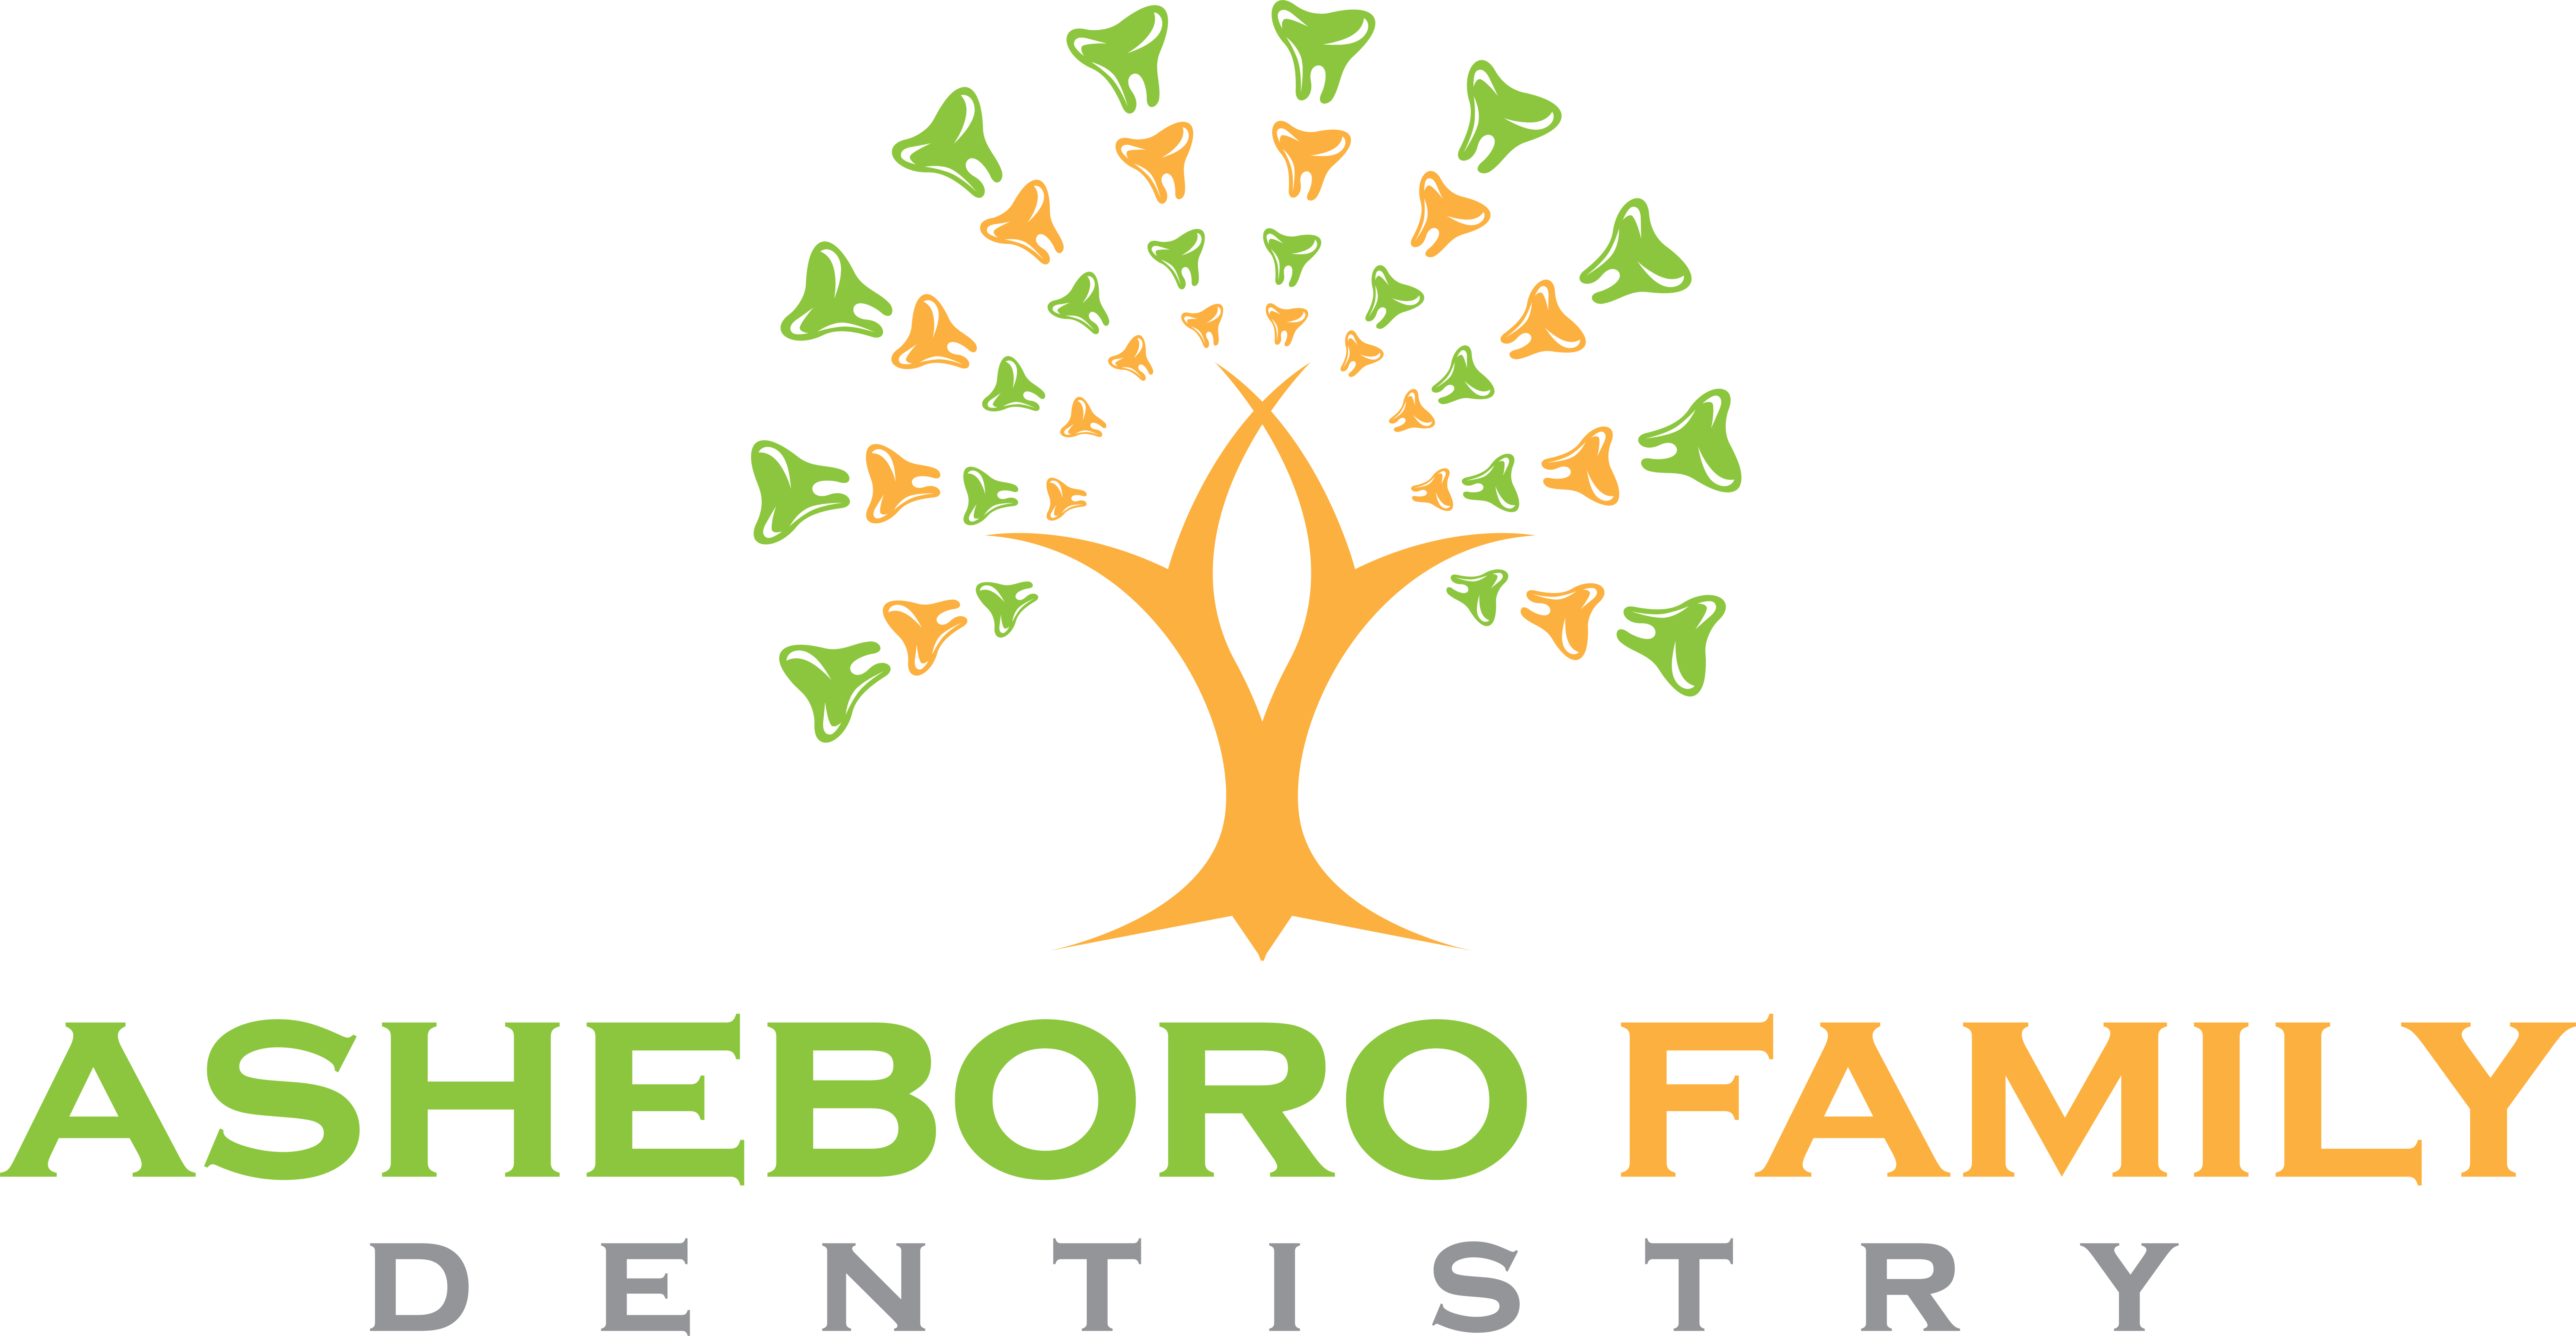 Asheboro Family Dentistry